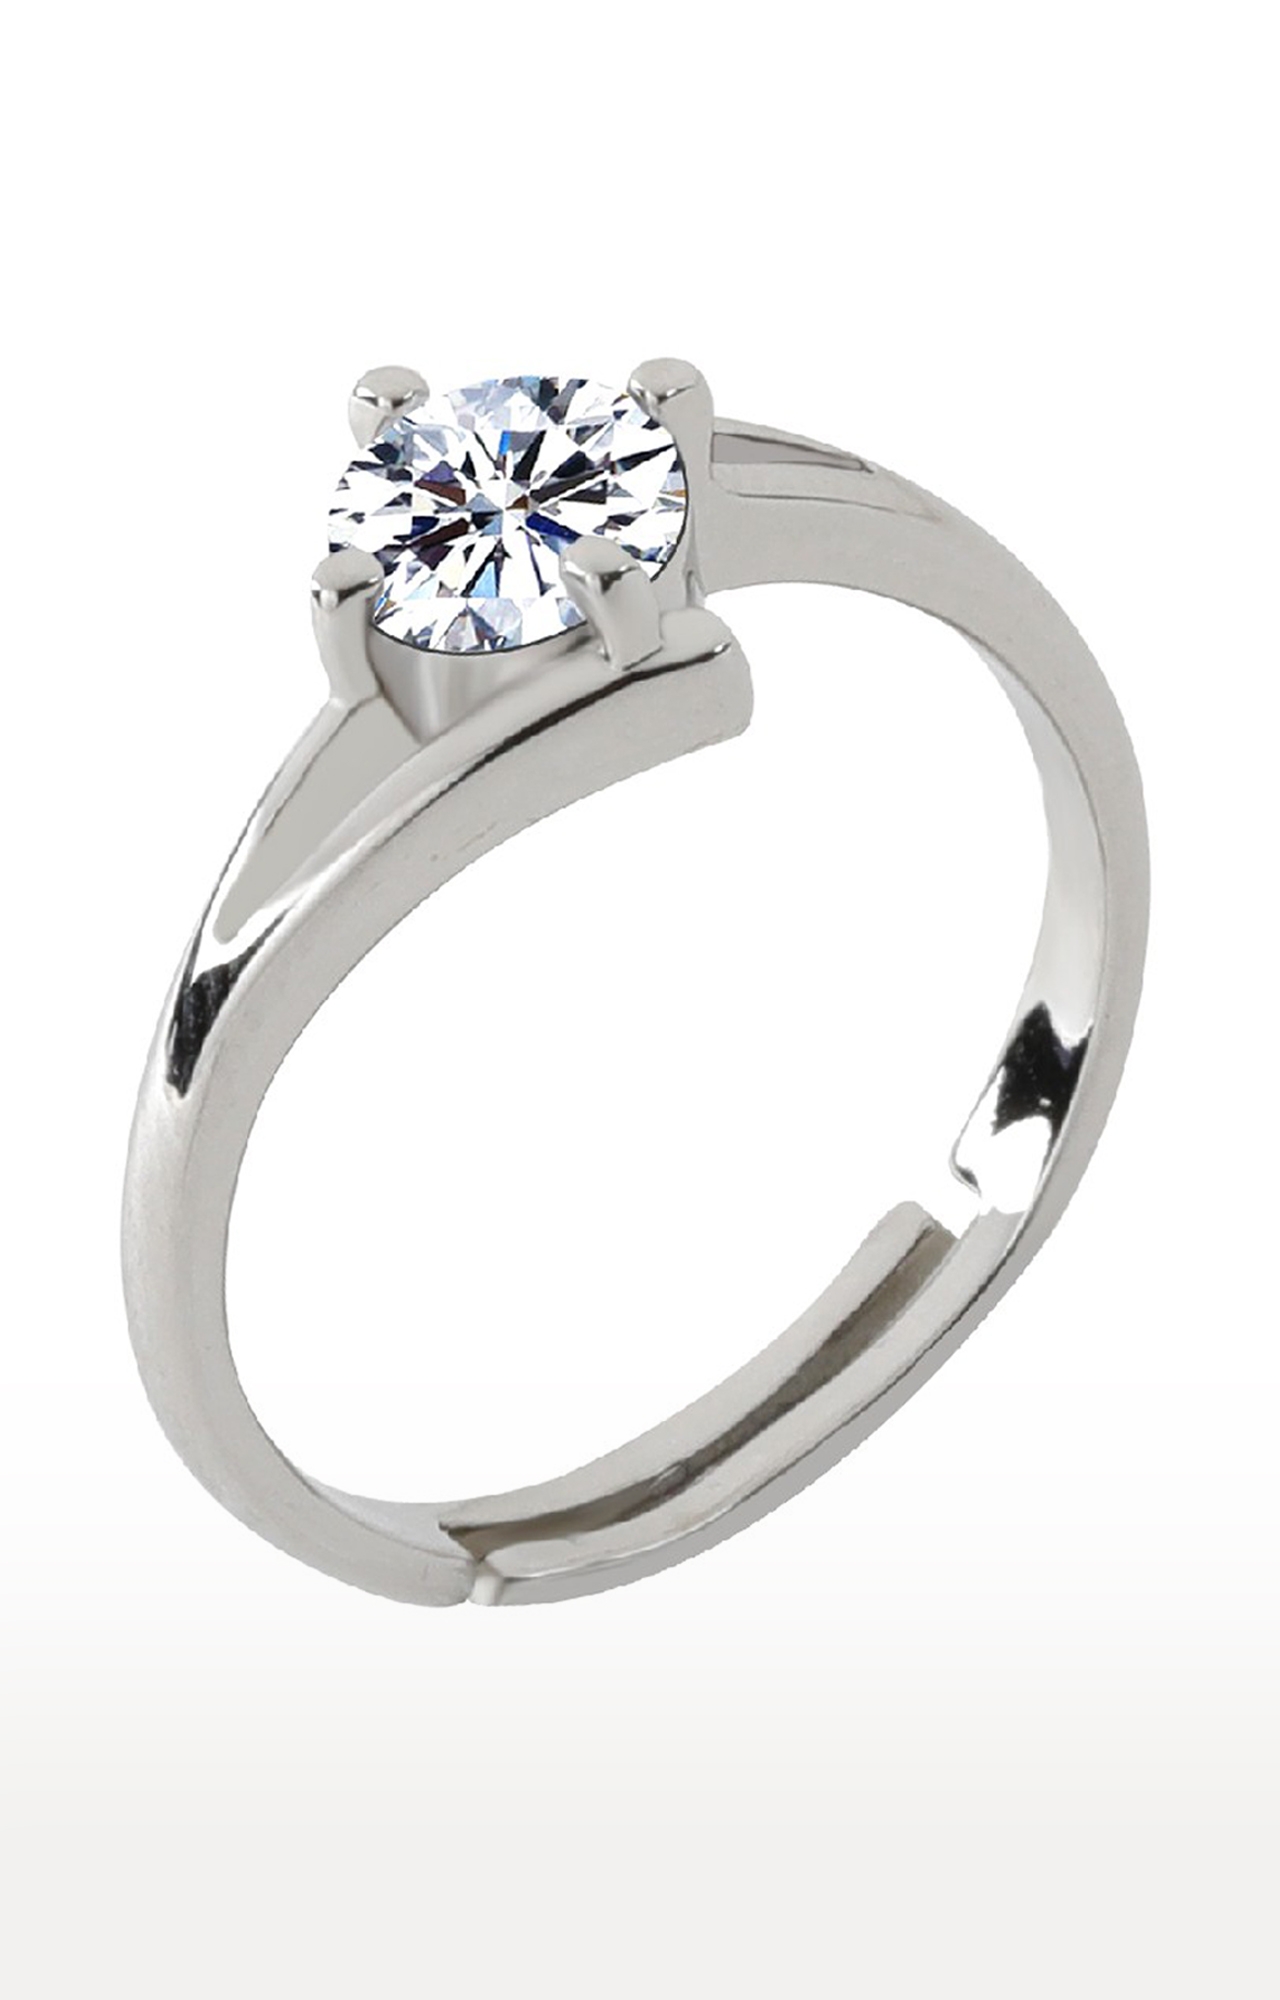 2 Pcs/Set Crystal Pandora Ring Jewelry Rose Gold Color Wedding Rings F